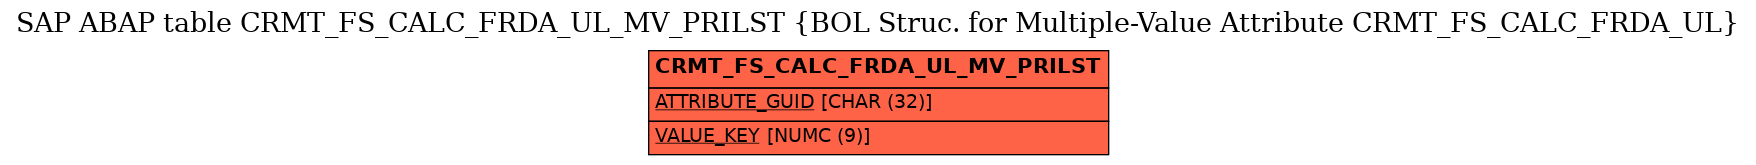 E-R Diagram for table CRMT_FS_CALC_FRDA_UL_MV_PRILST (BOL Struc. for Multiple-Value Attribute CRMT_FS_CALC_FRDA_UL)